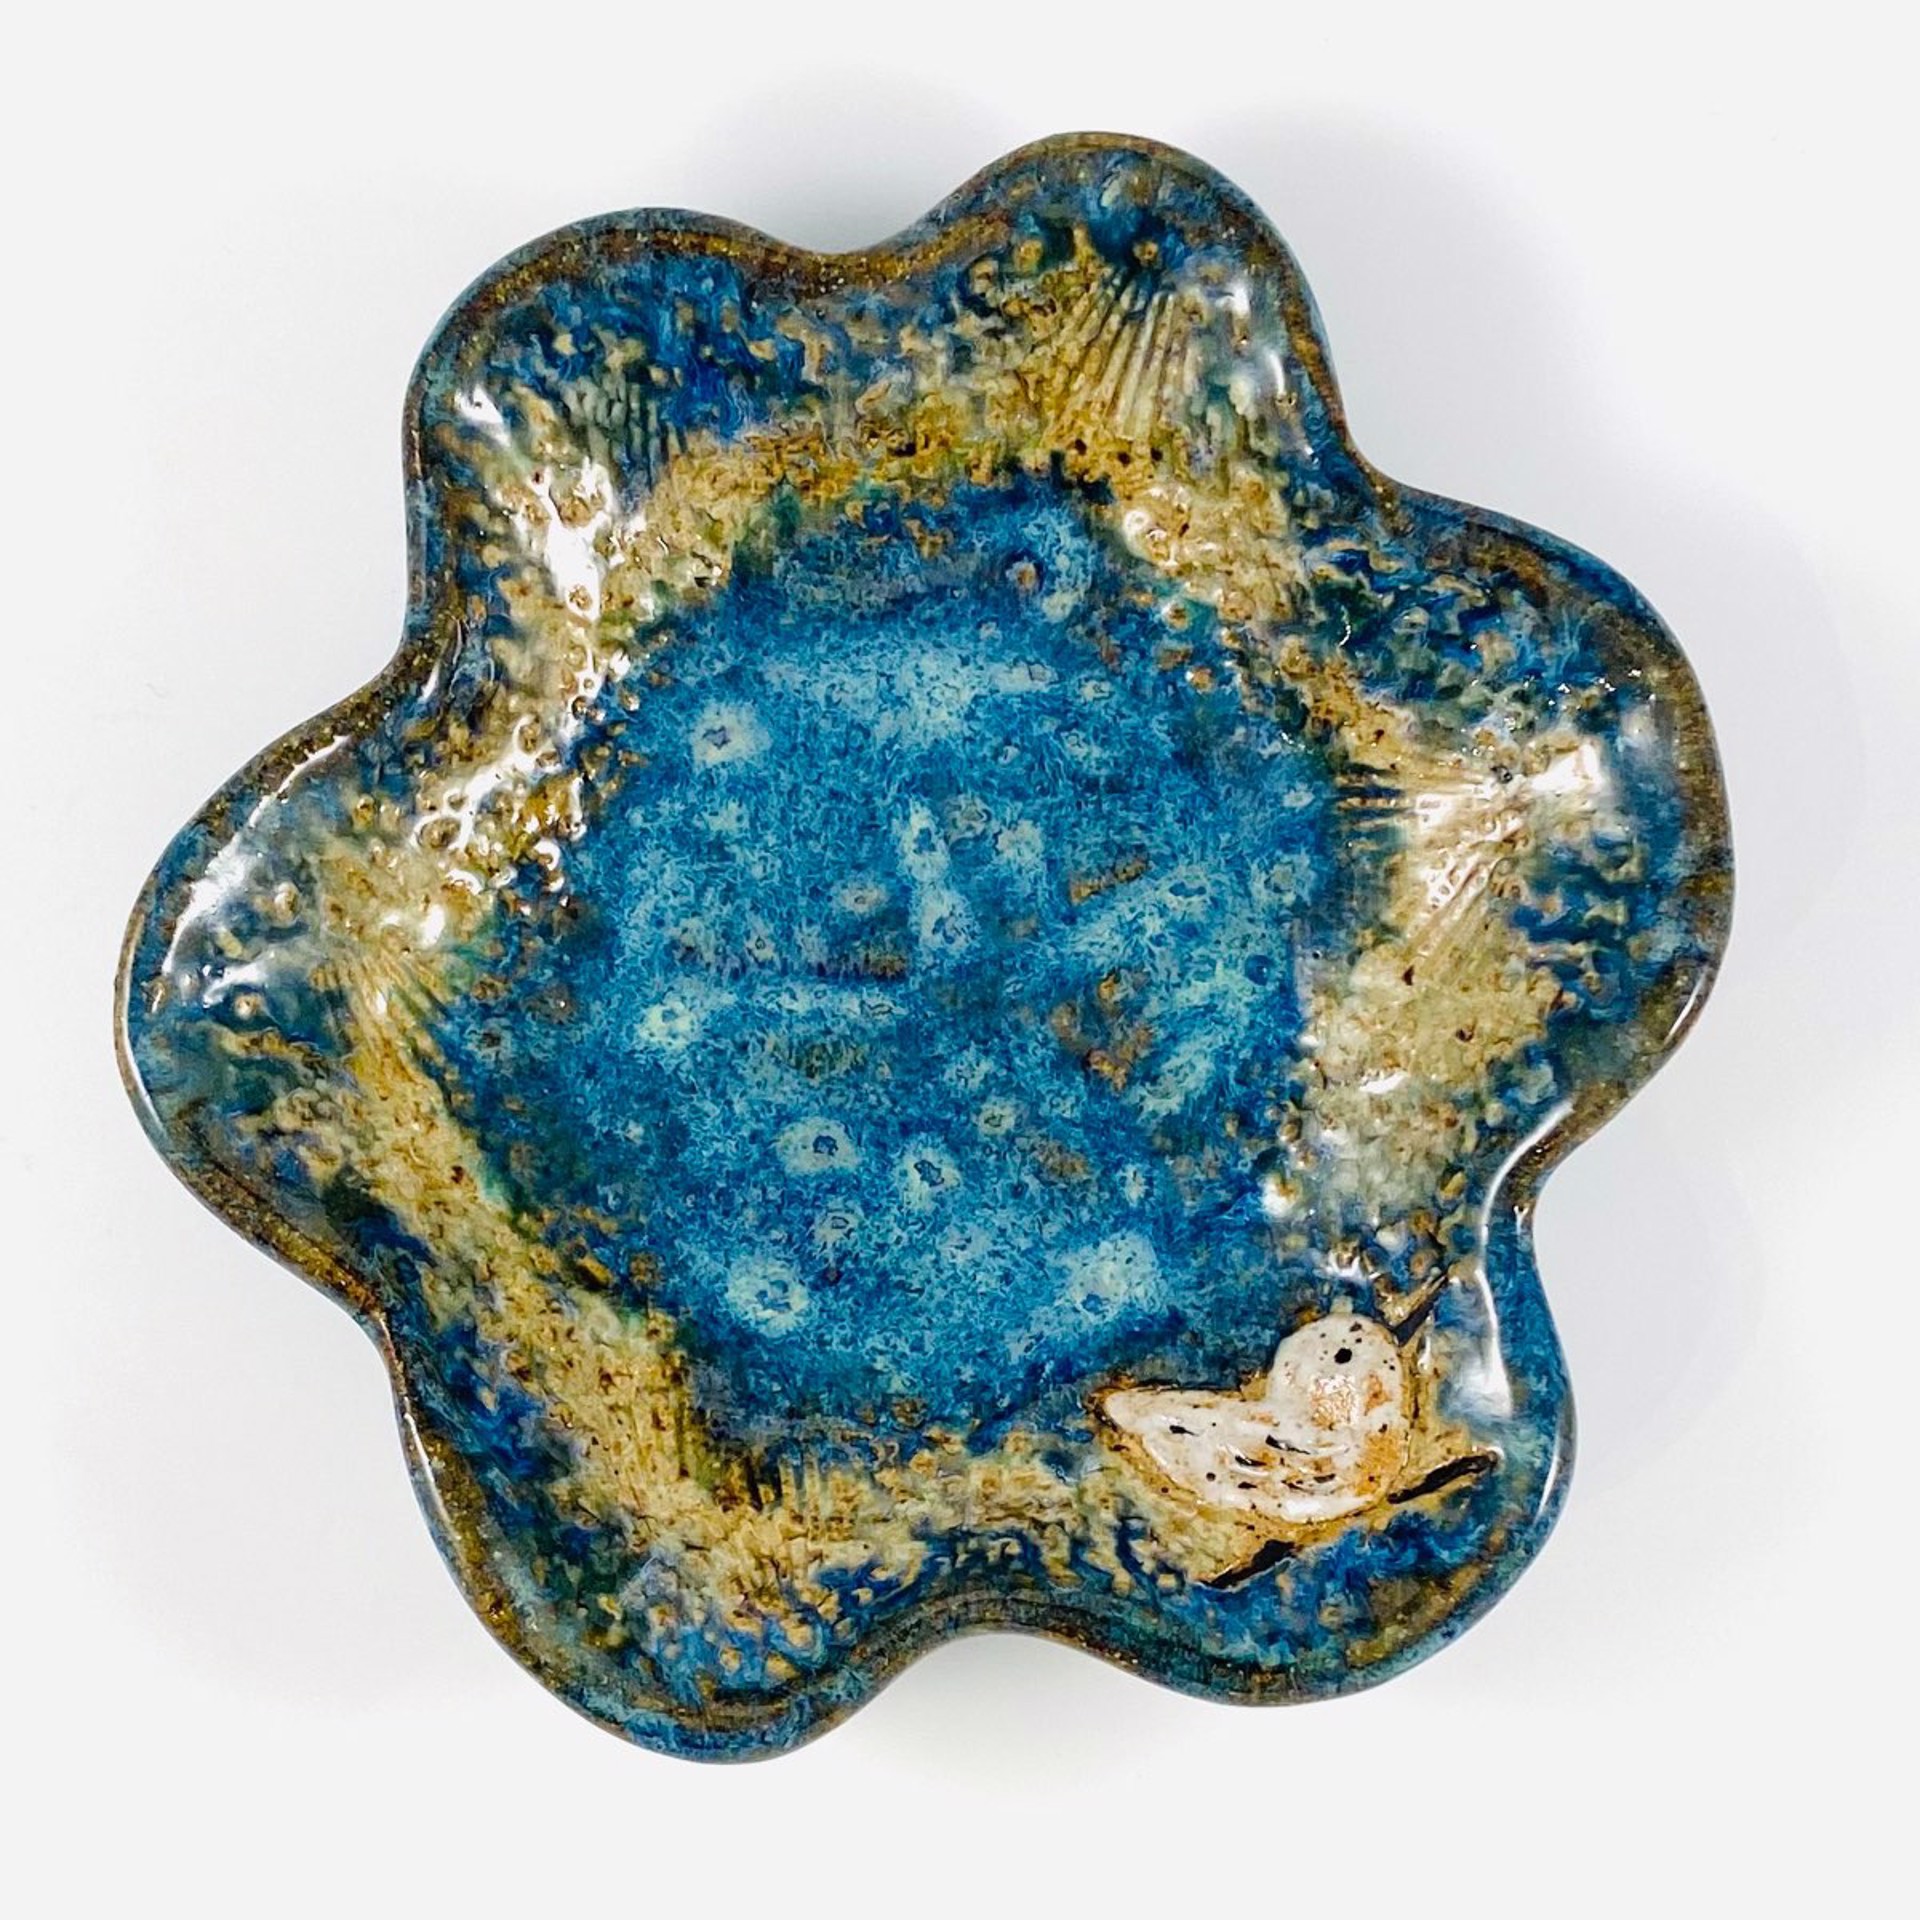 Logan22-869 Small Scalloped Bowl with Turtle (Blue Glaze) by Jim & Steffi Logan